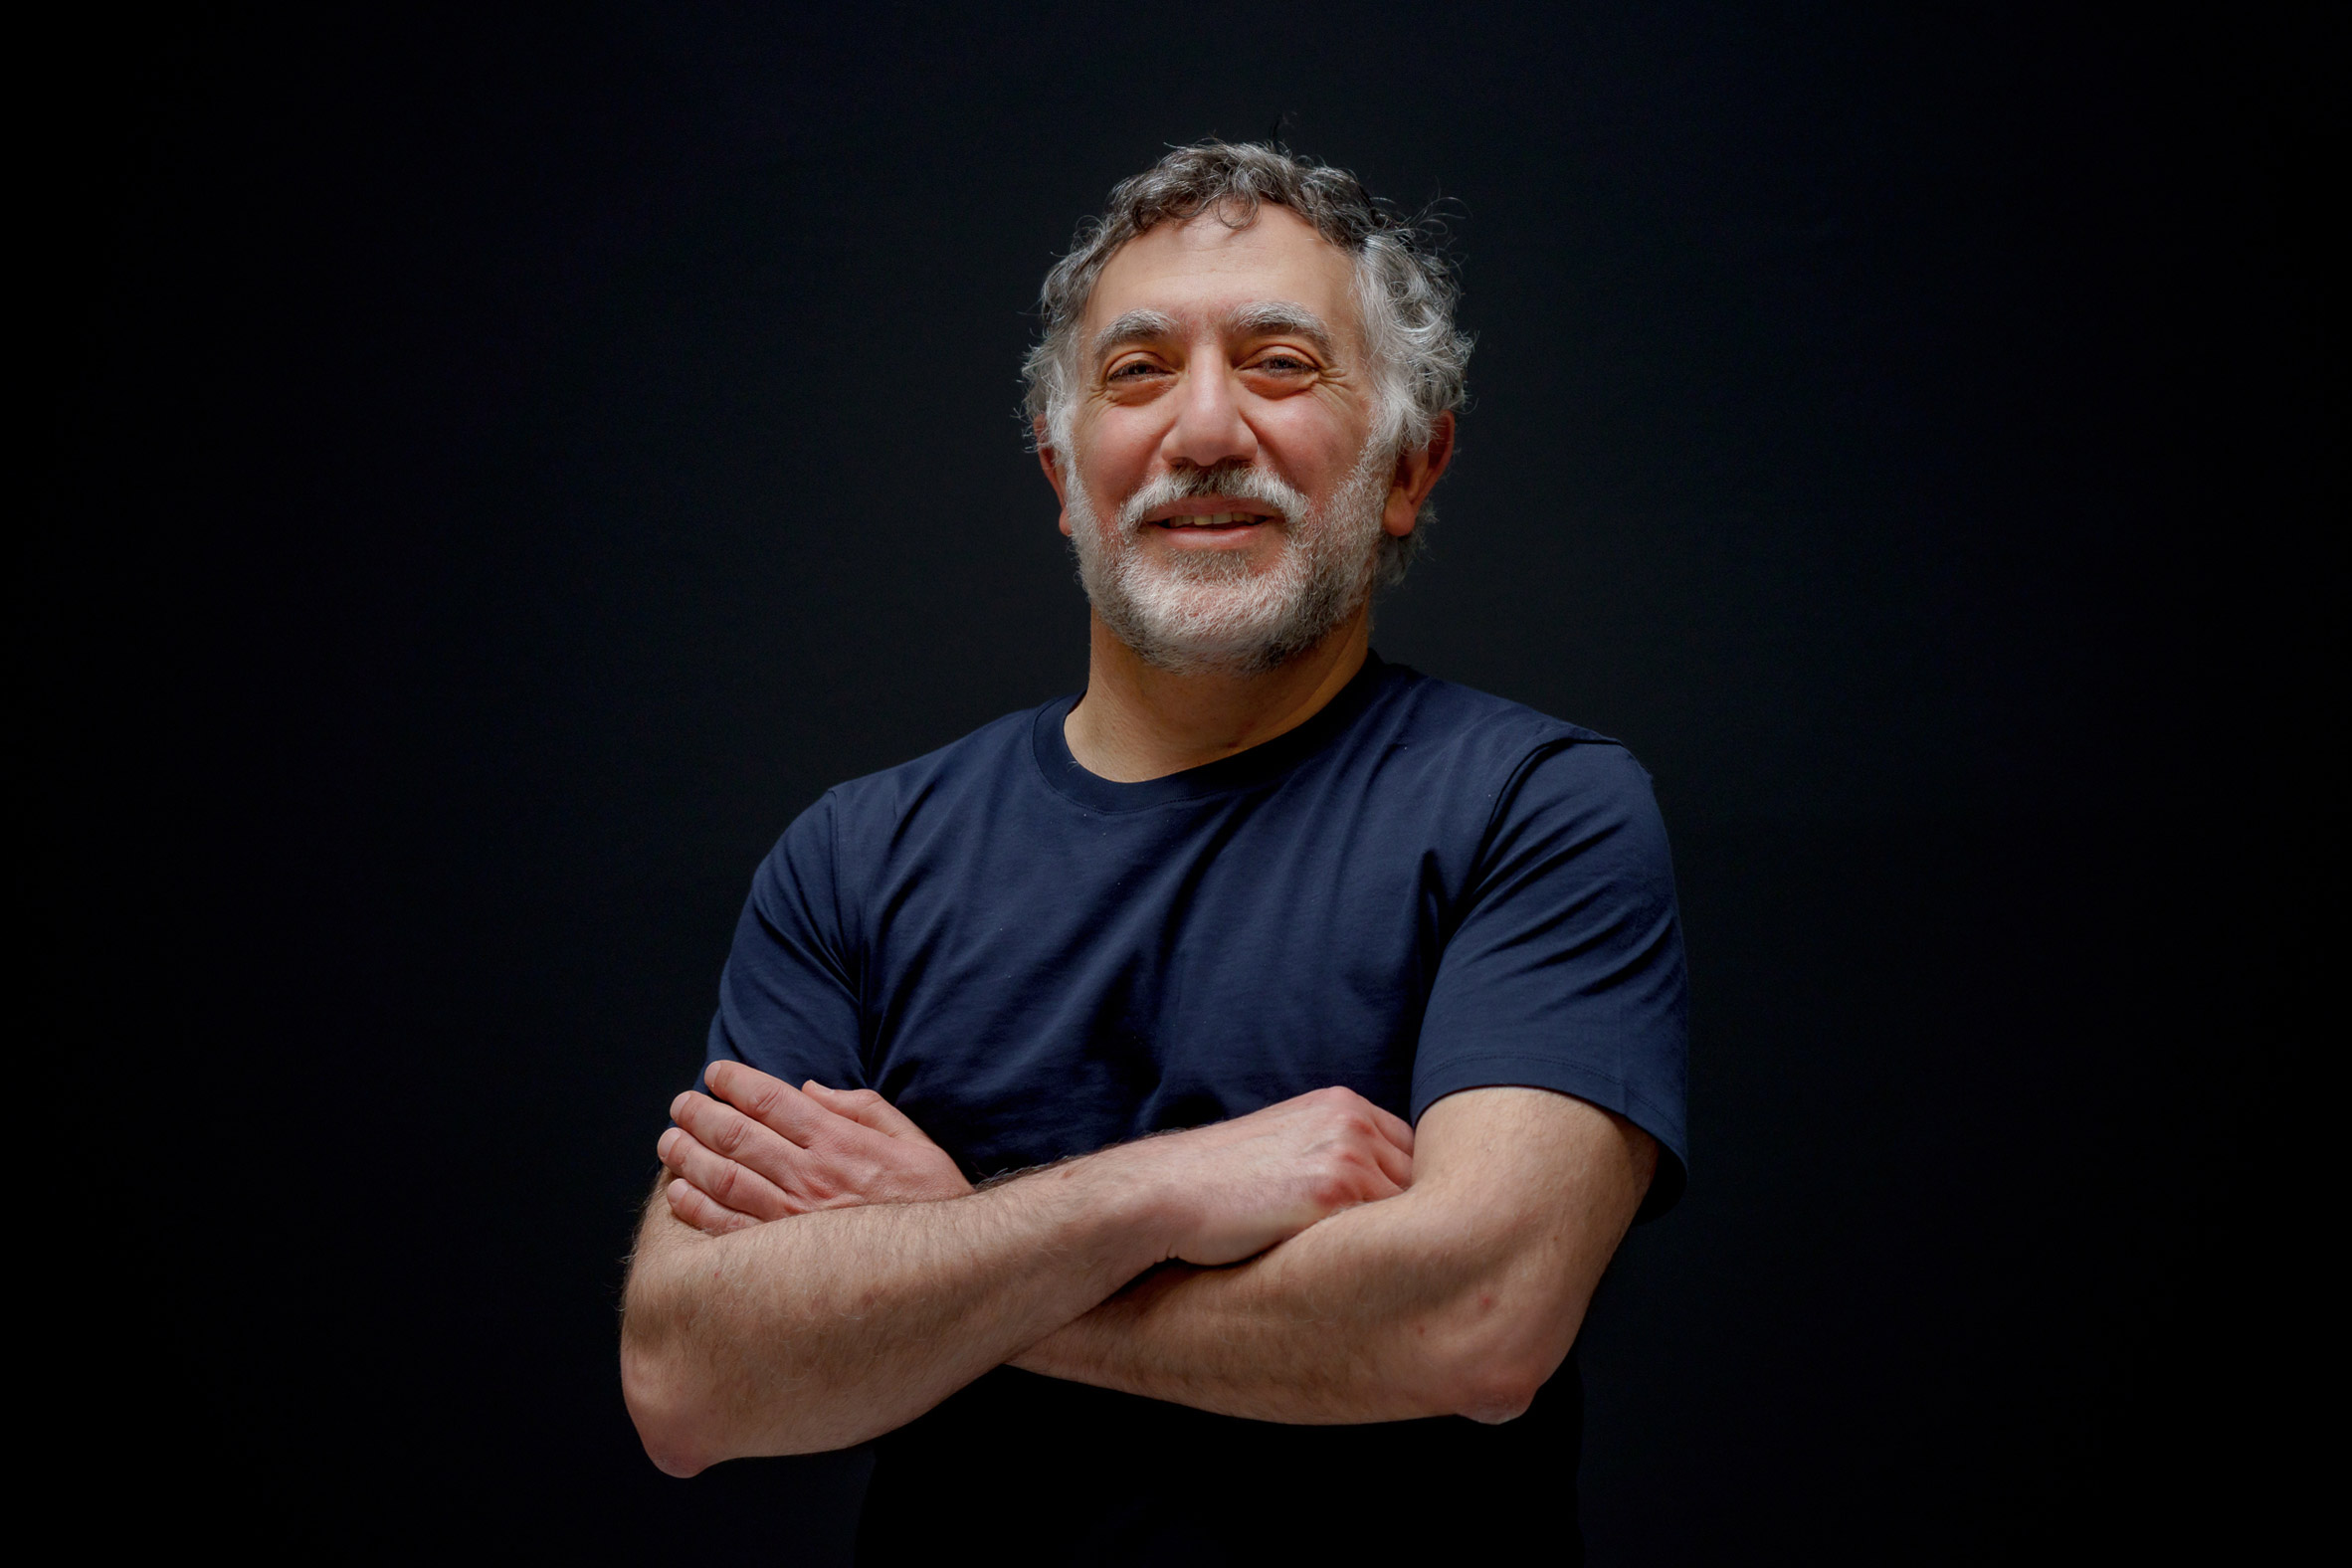 Curator Hashim Sarkis